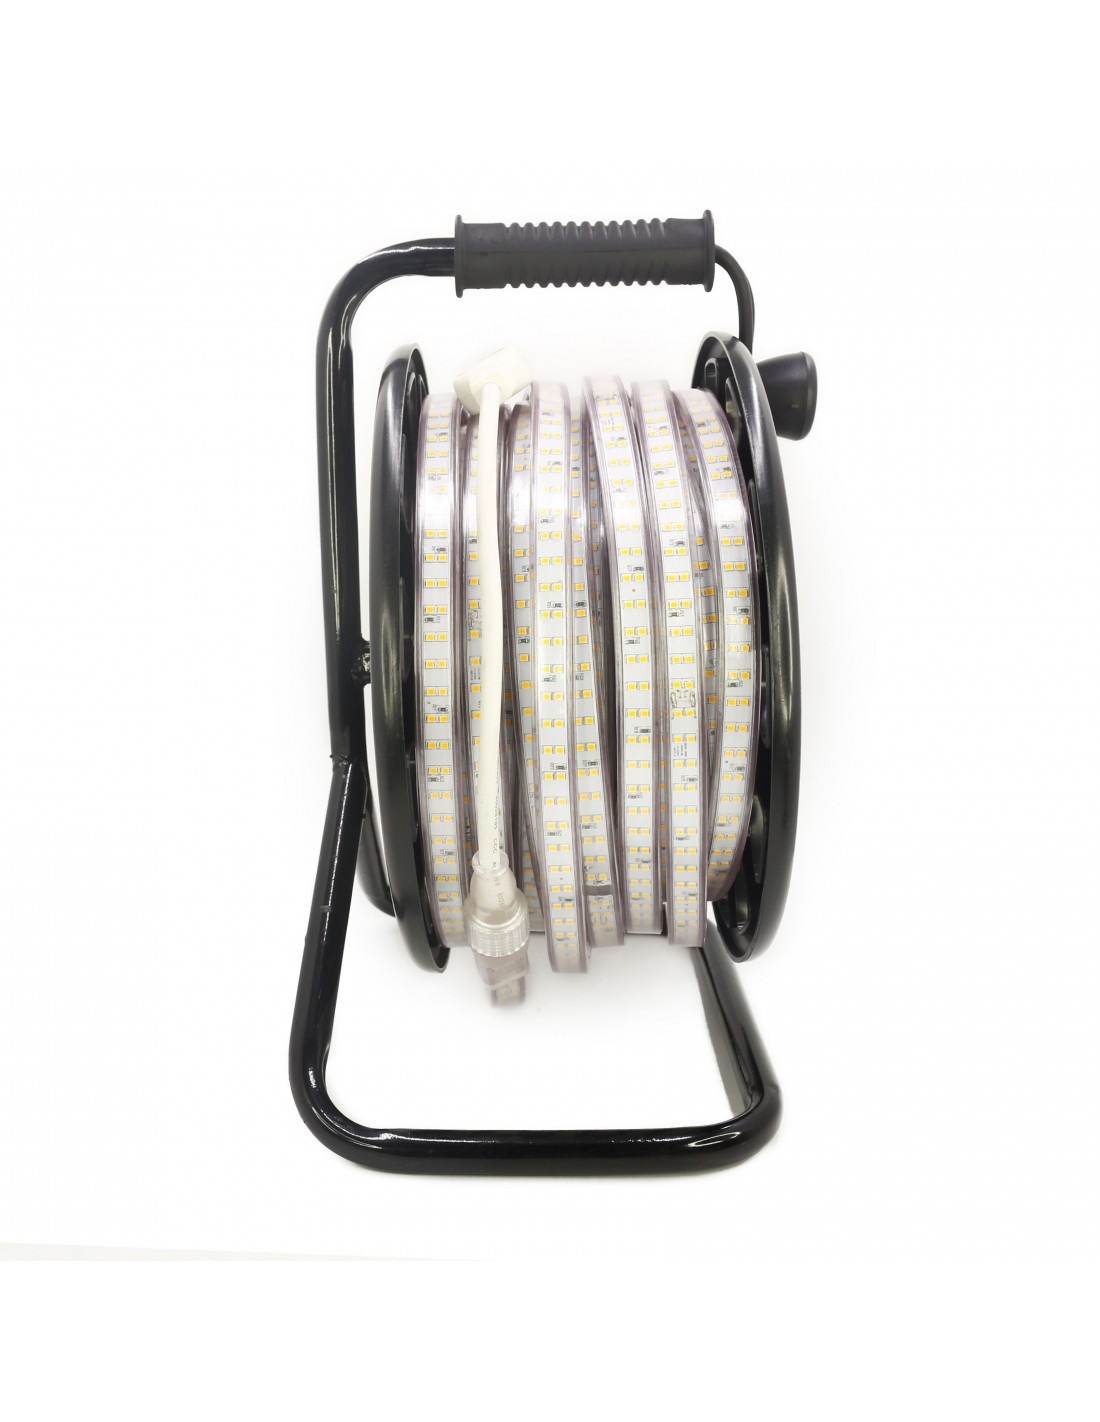 RibbON LED strip light on reel 25 meter Stak : achetez au meilleur